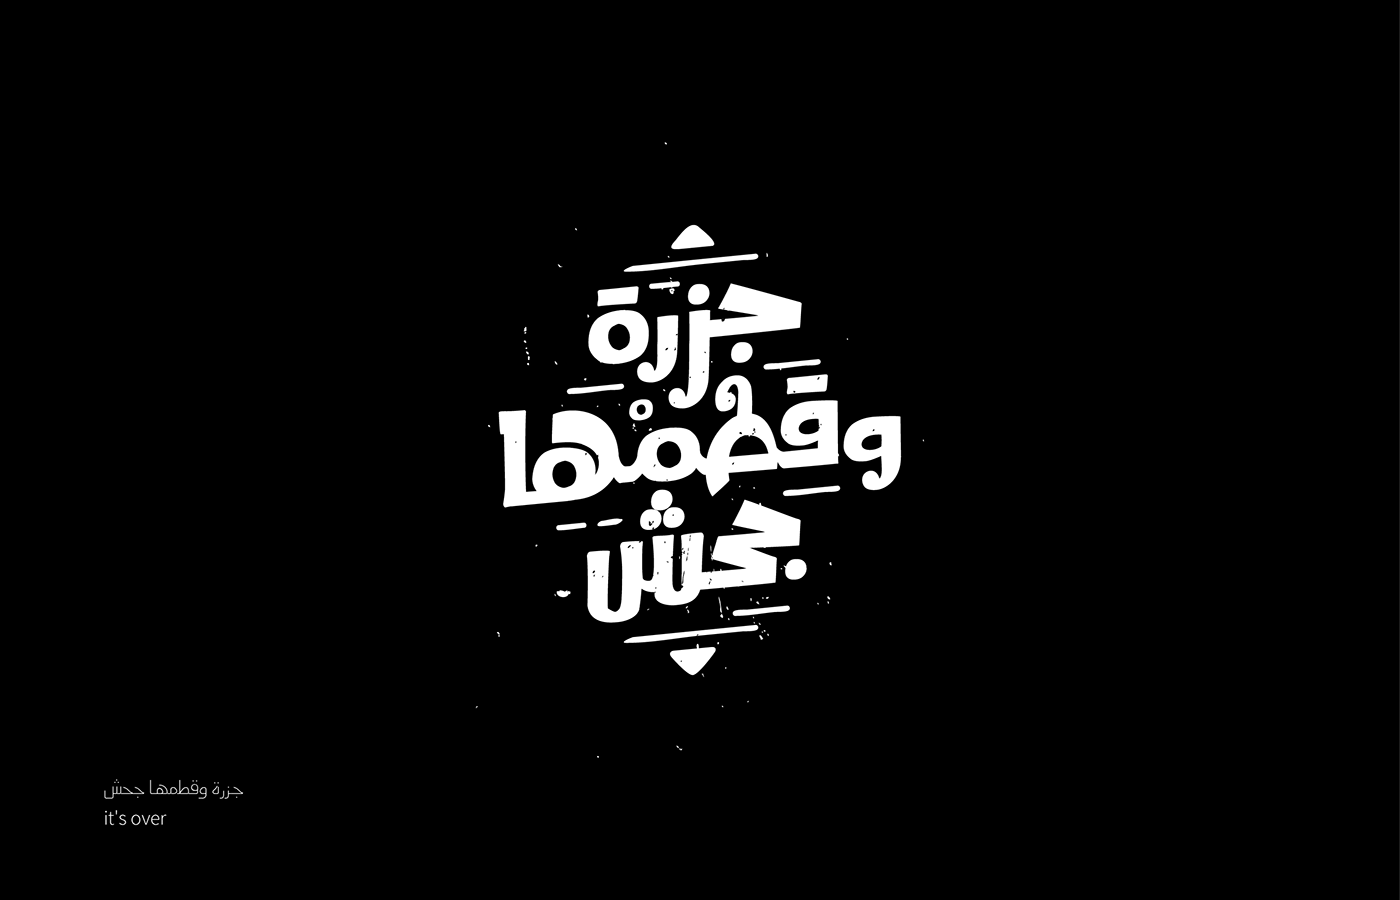 typo arabic Quotes تيبوجرافي كاليجرافي عربي خط lettering tshirt shirt